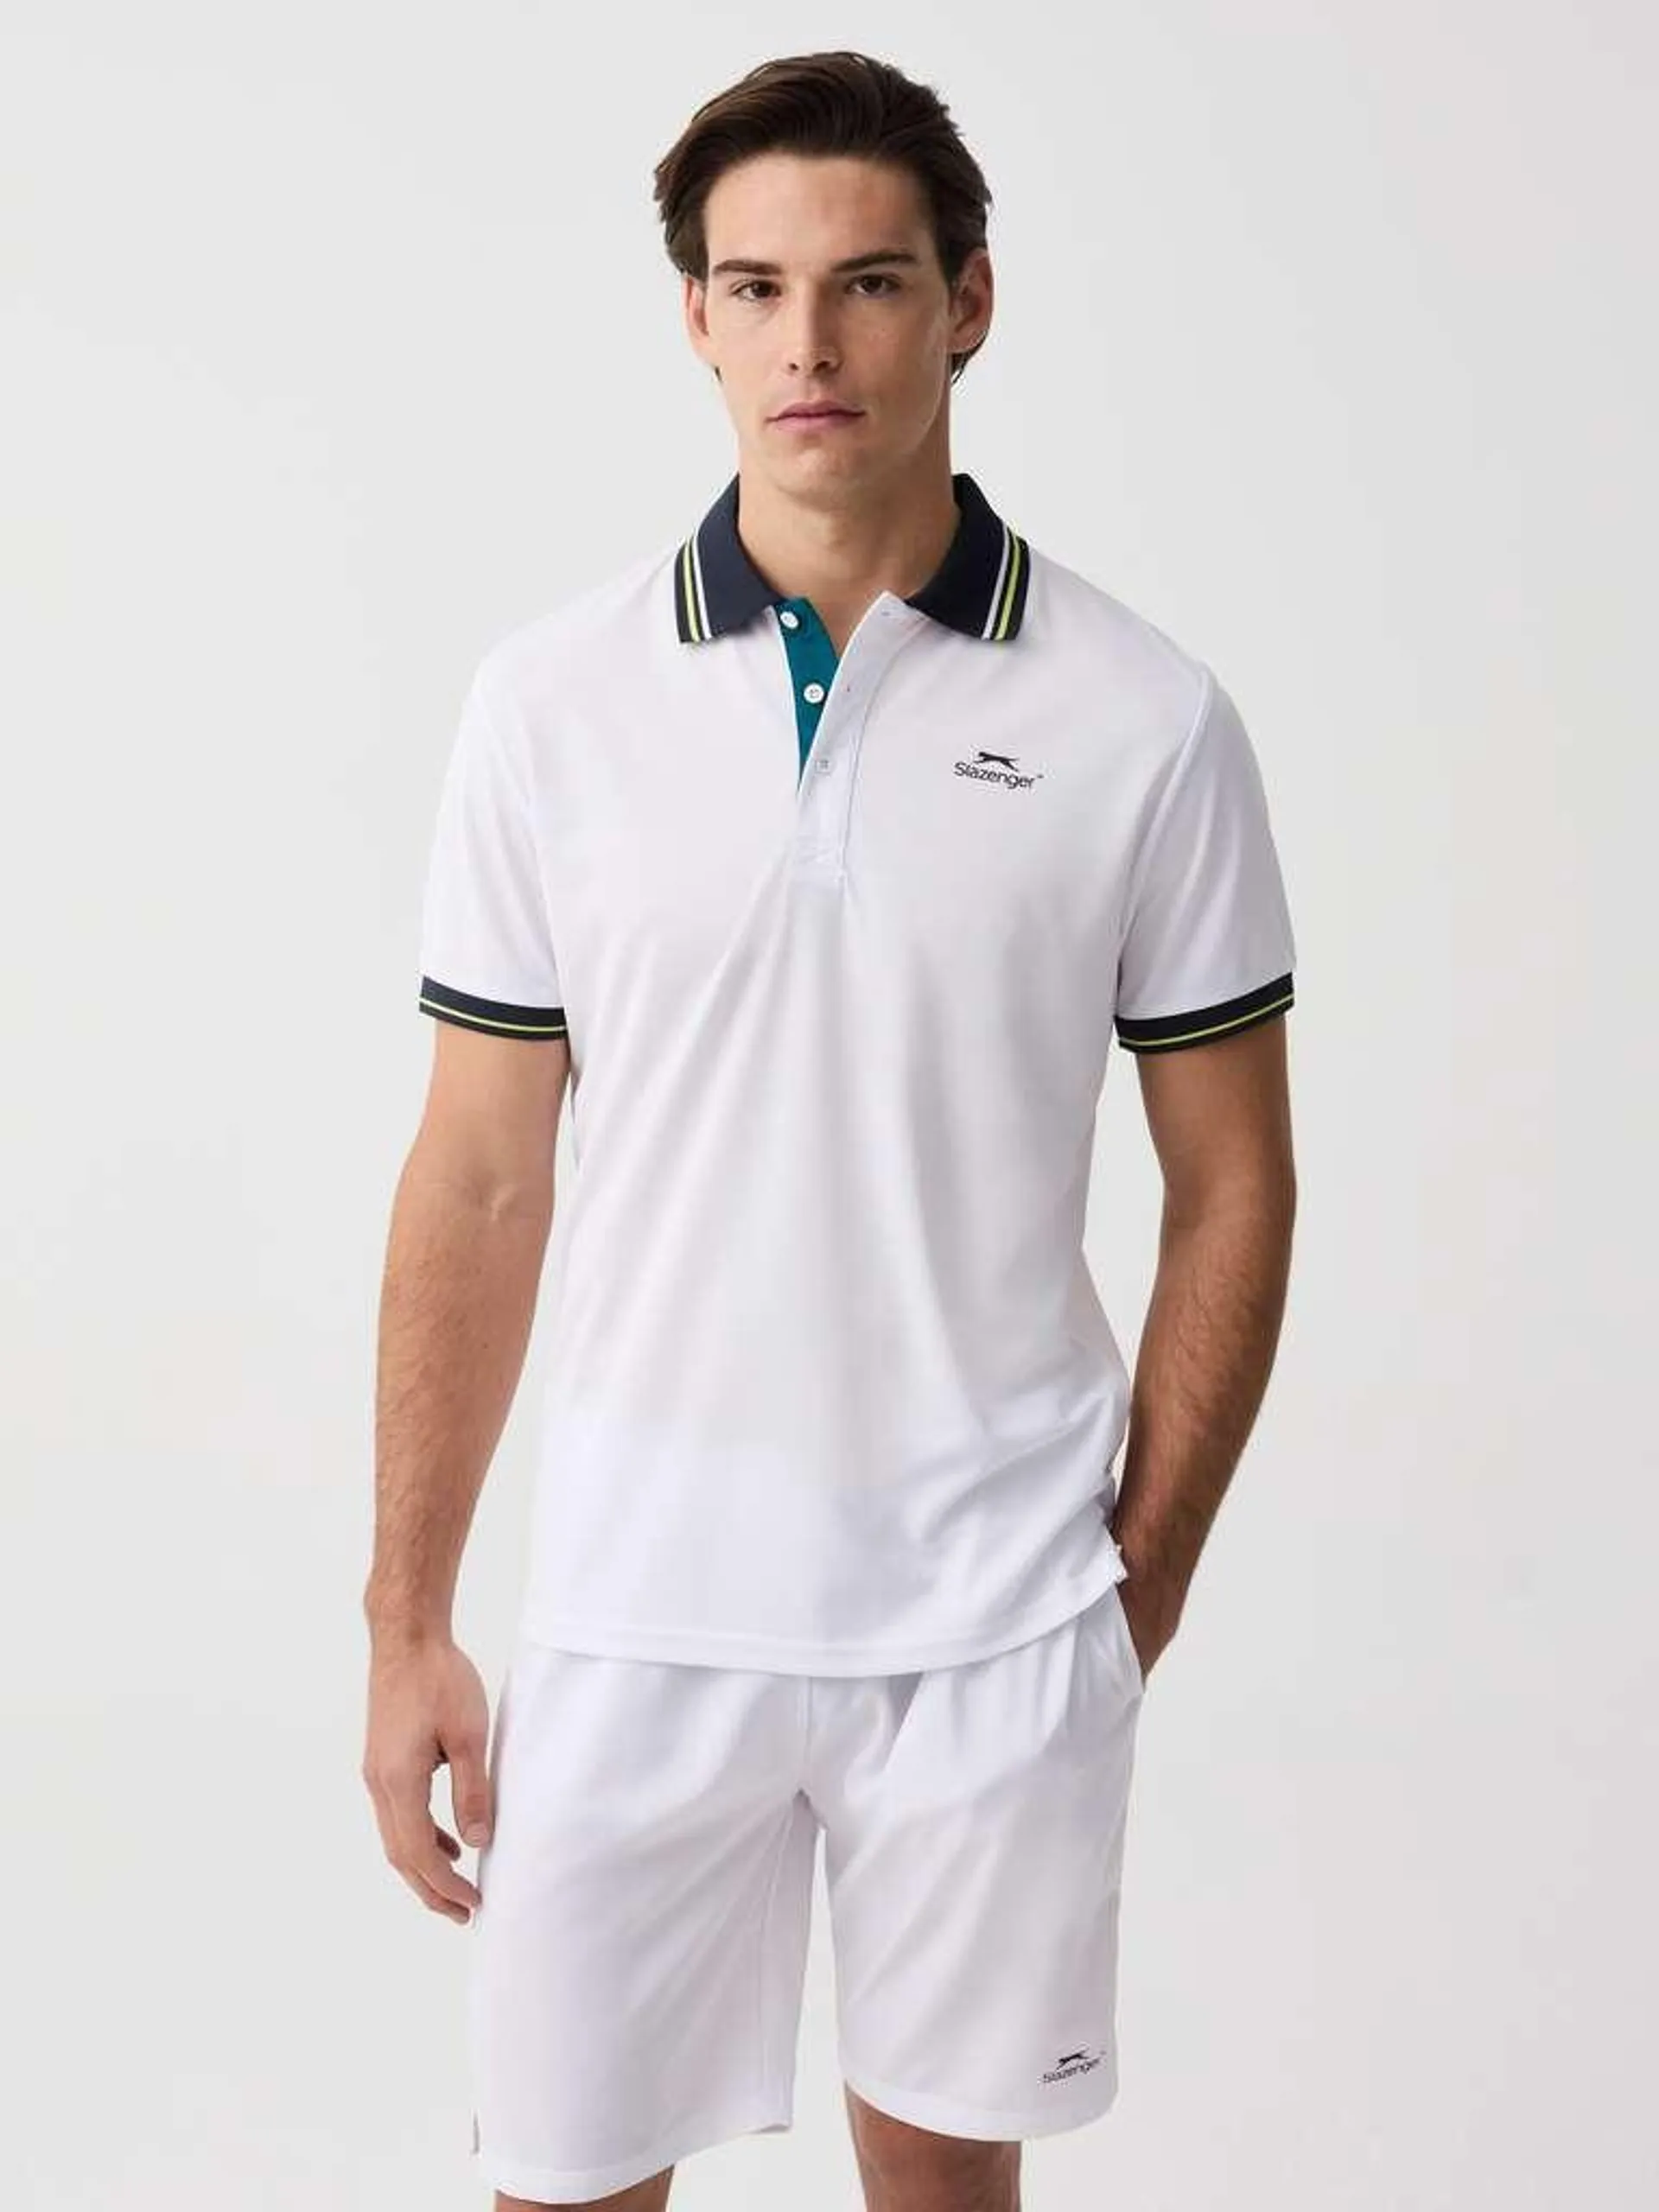 Optical White Slazenger tennis polo shirt with striped trims